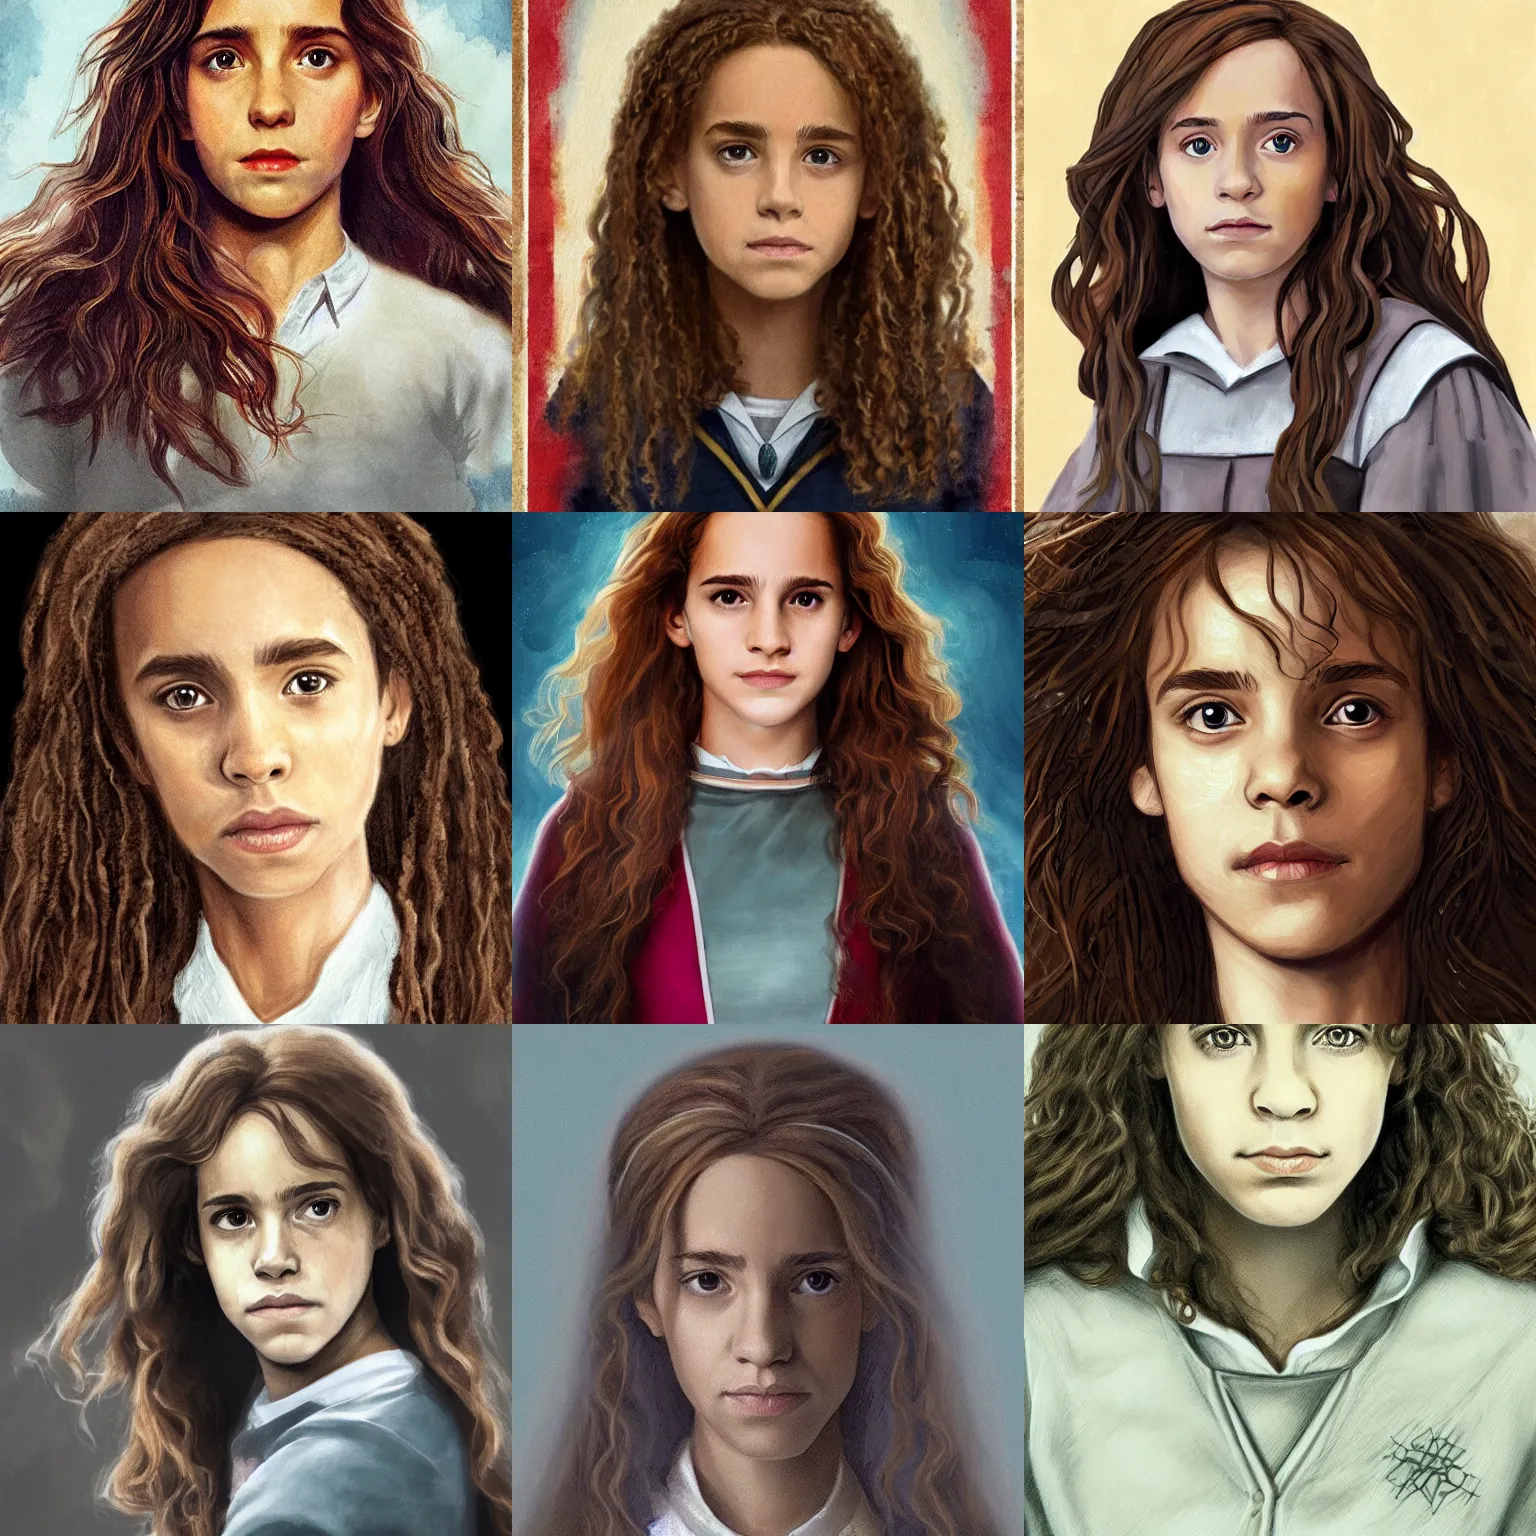 Prompt: beautiful portrait of hermione granger